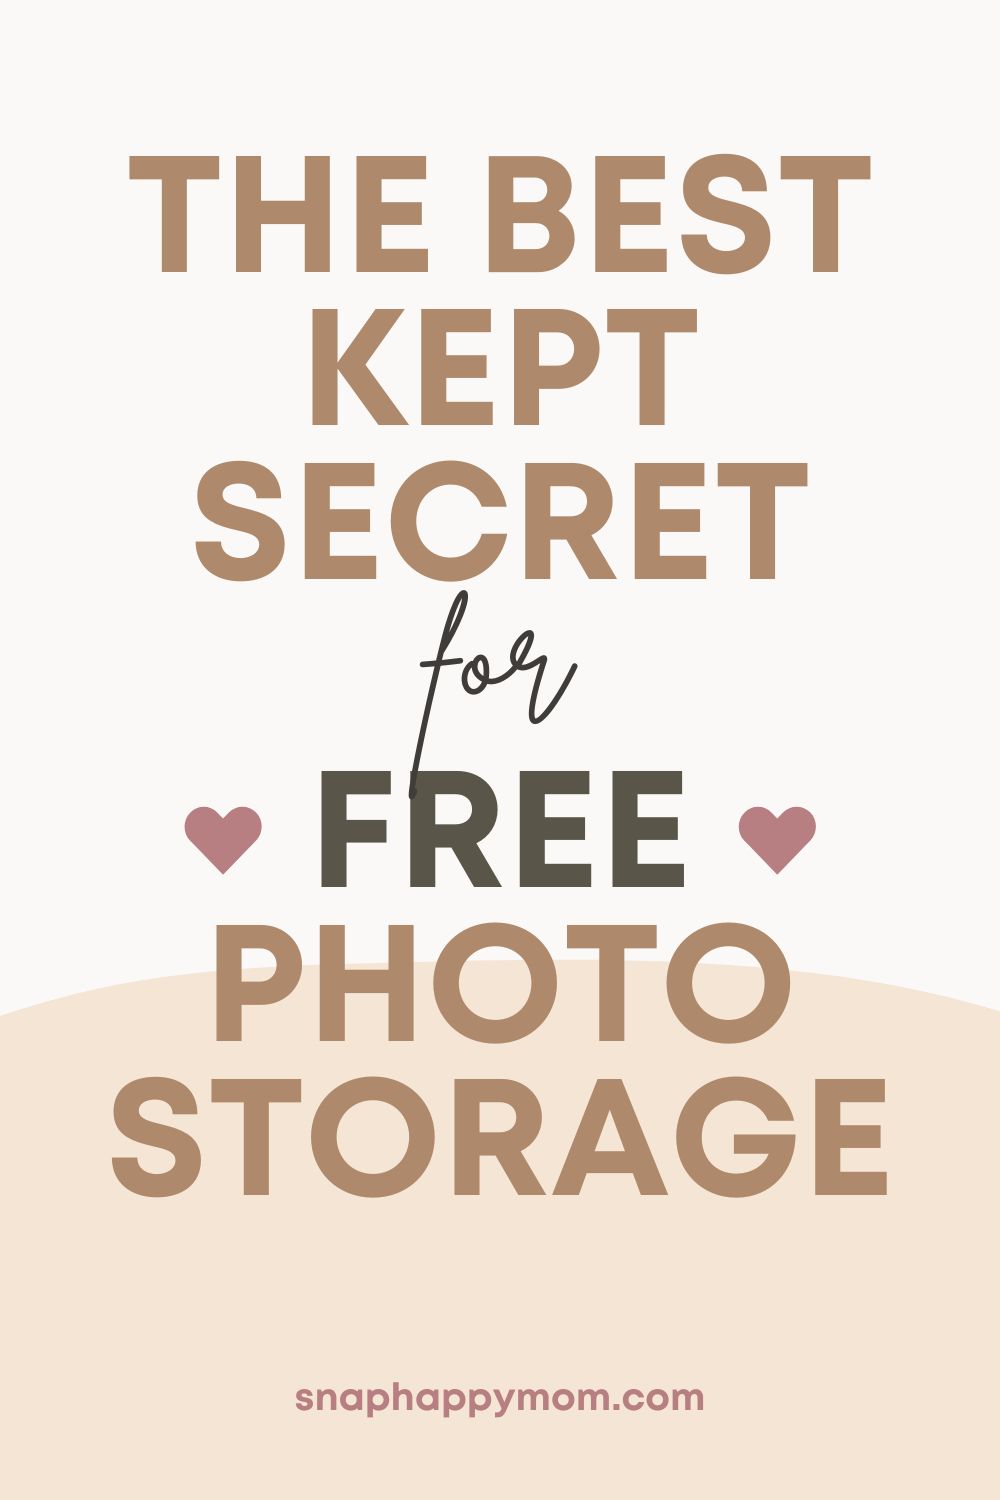 Er Amazon Photo Storage virkelig gratis?